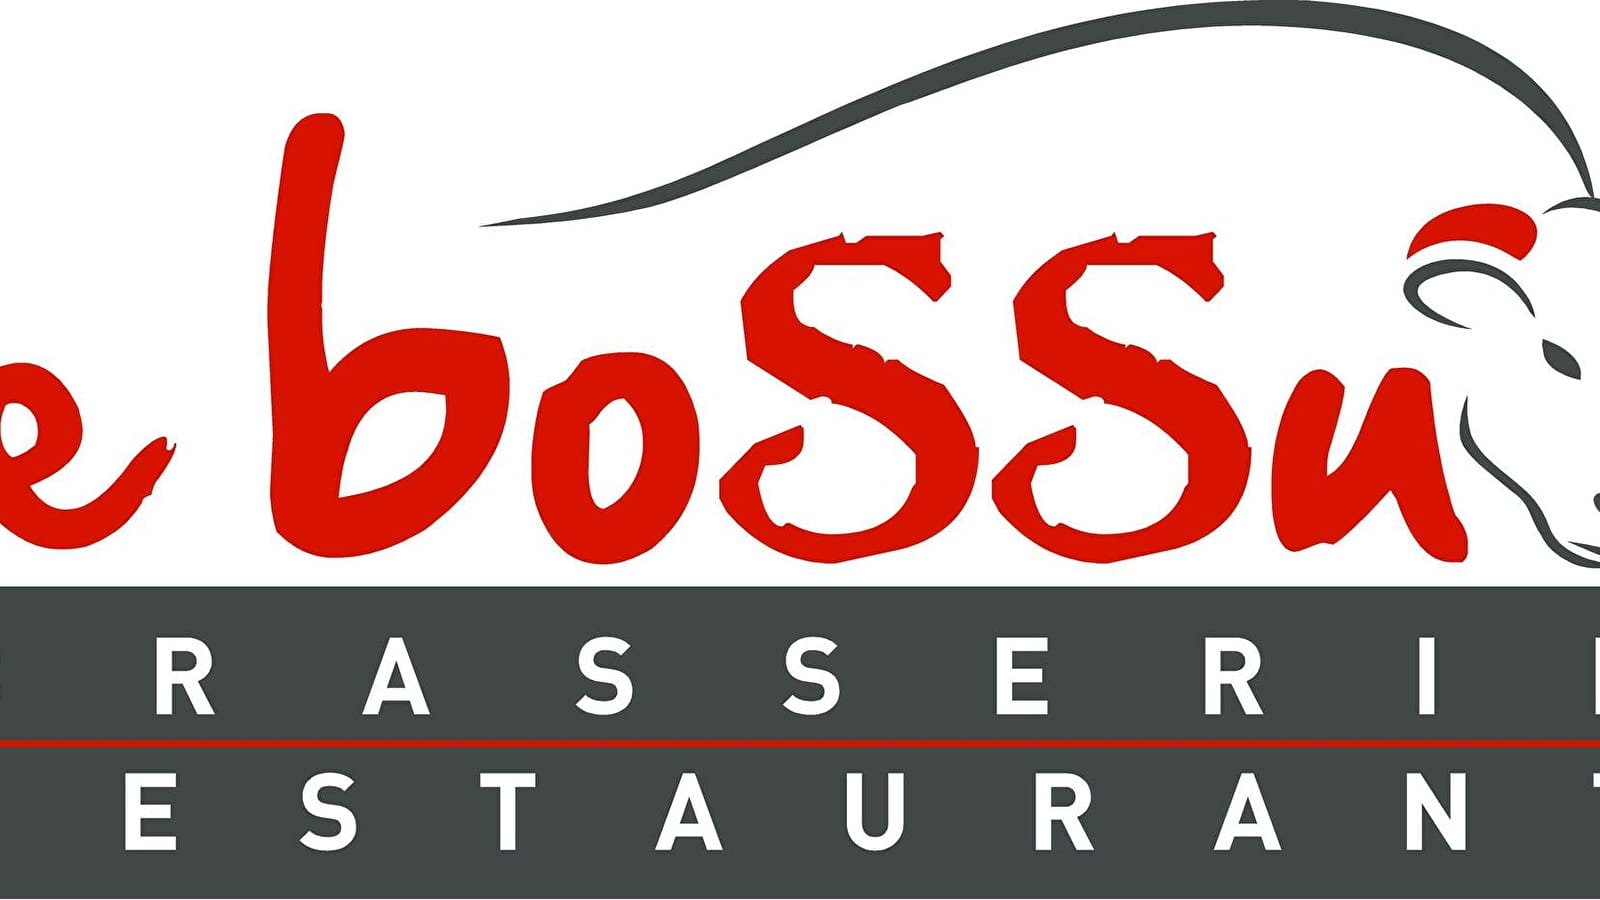 Brasserie Le Bossu